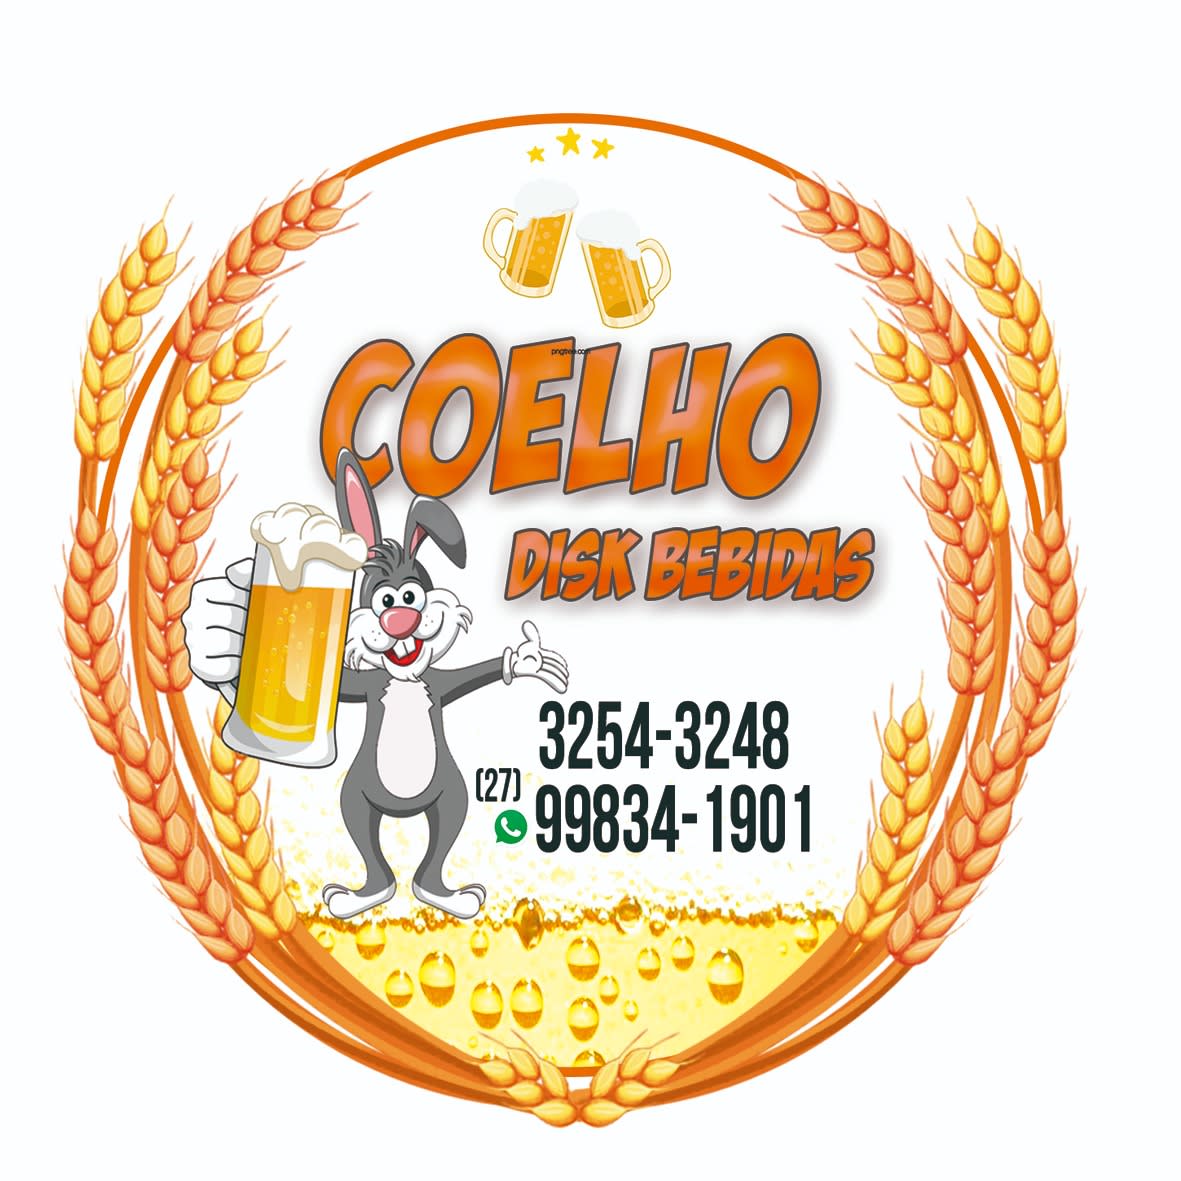 Coelho Disk Bebidas